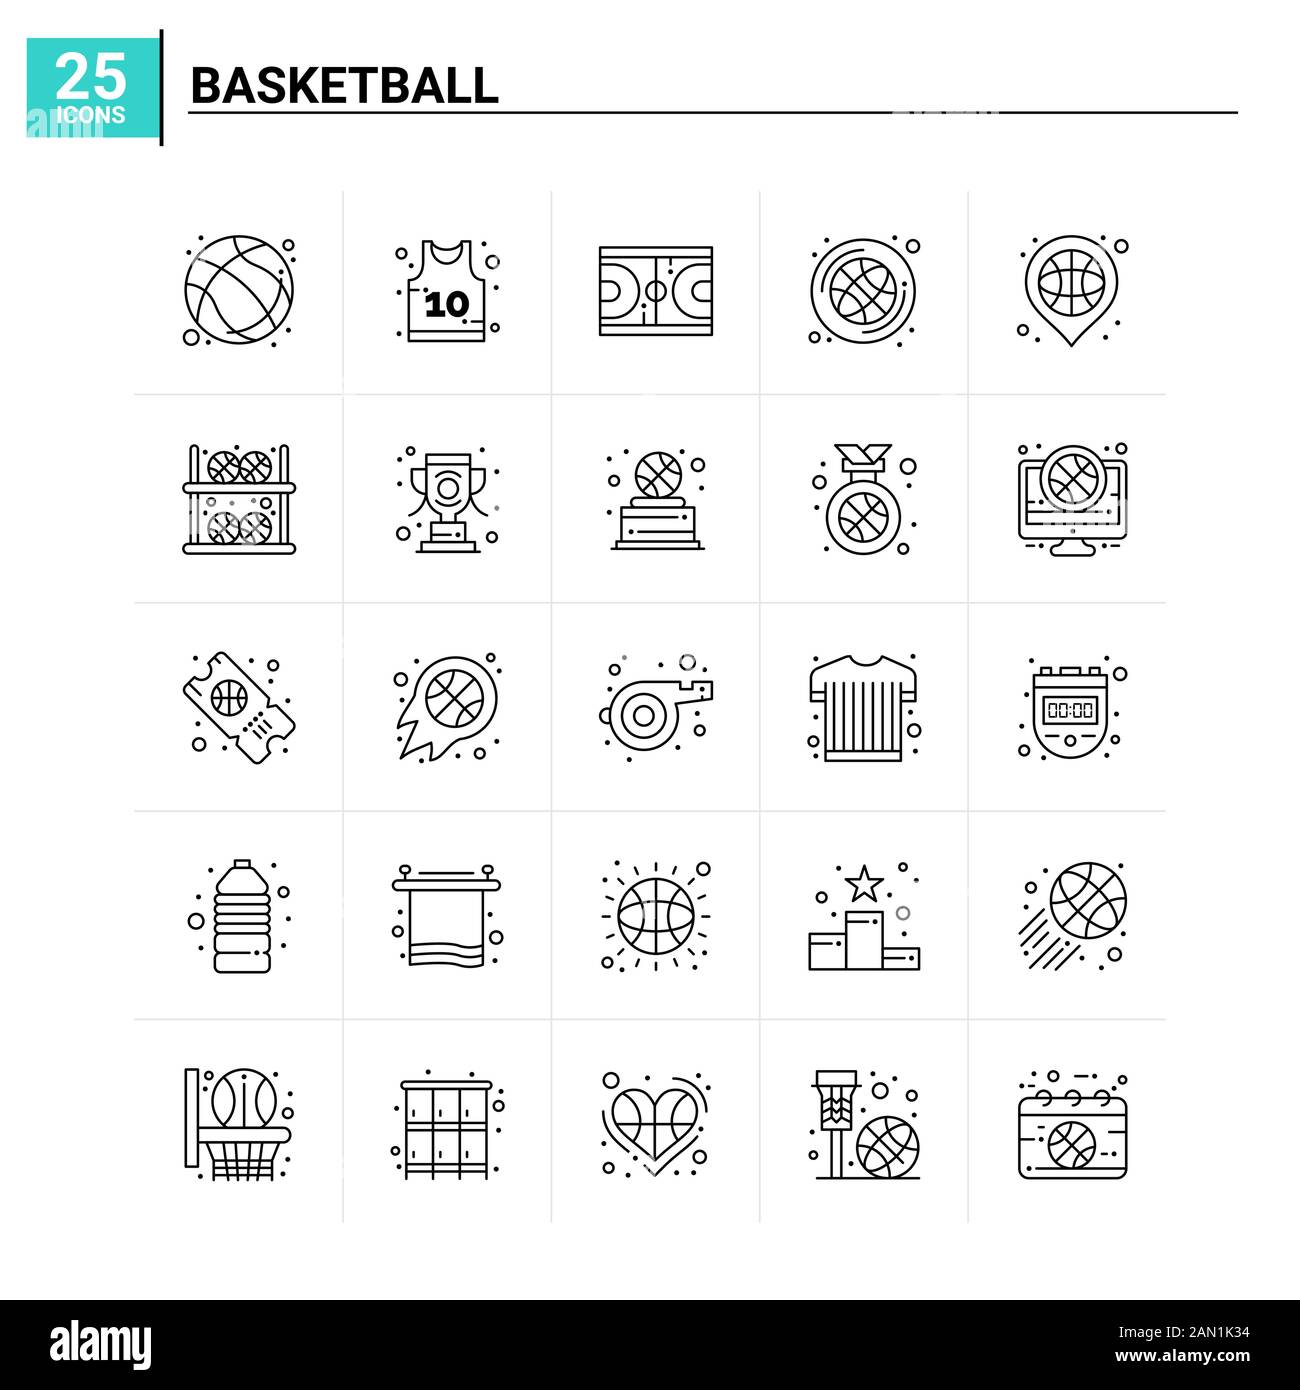 25 Basketball icon set. vector background Stock Vector